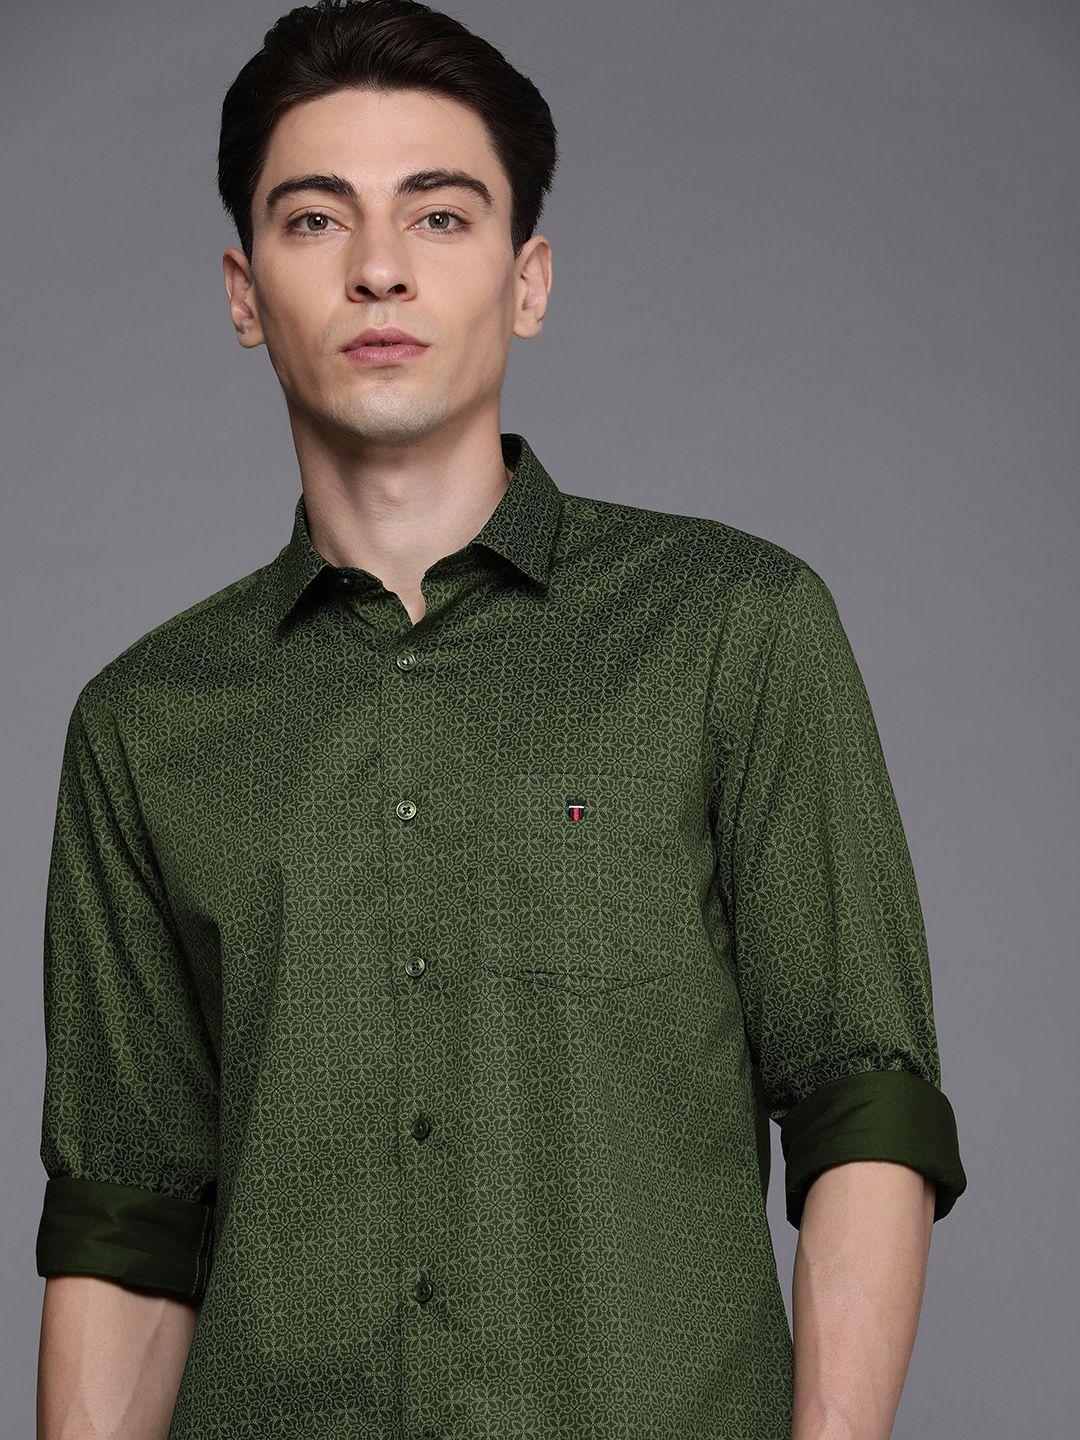 louis philippe sport men slim fit ethnic motifs printed pure cotton casual shirt